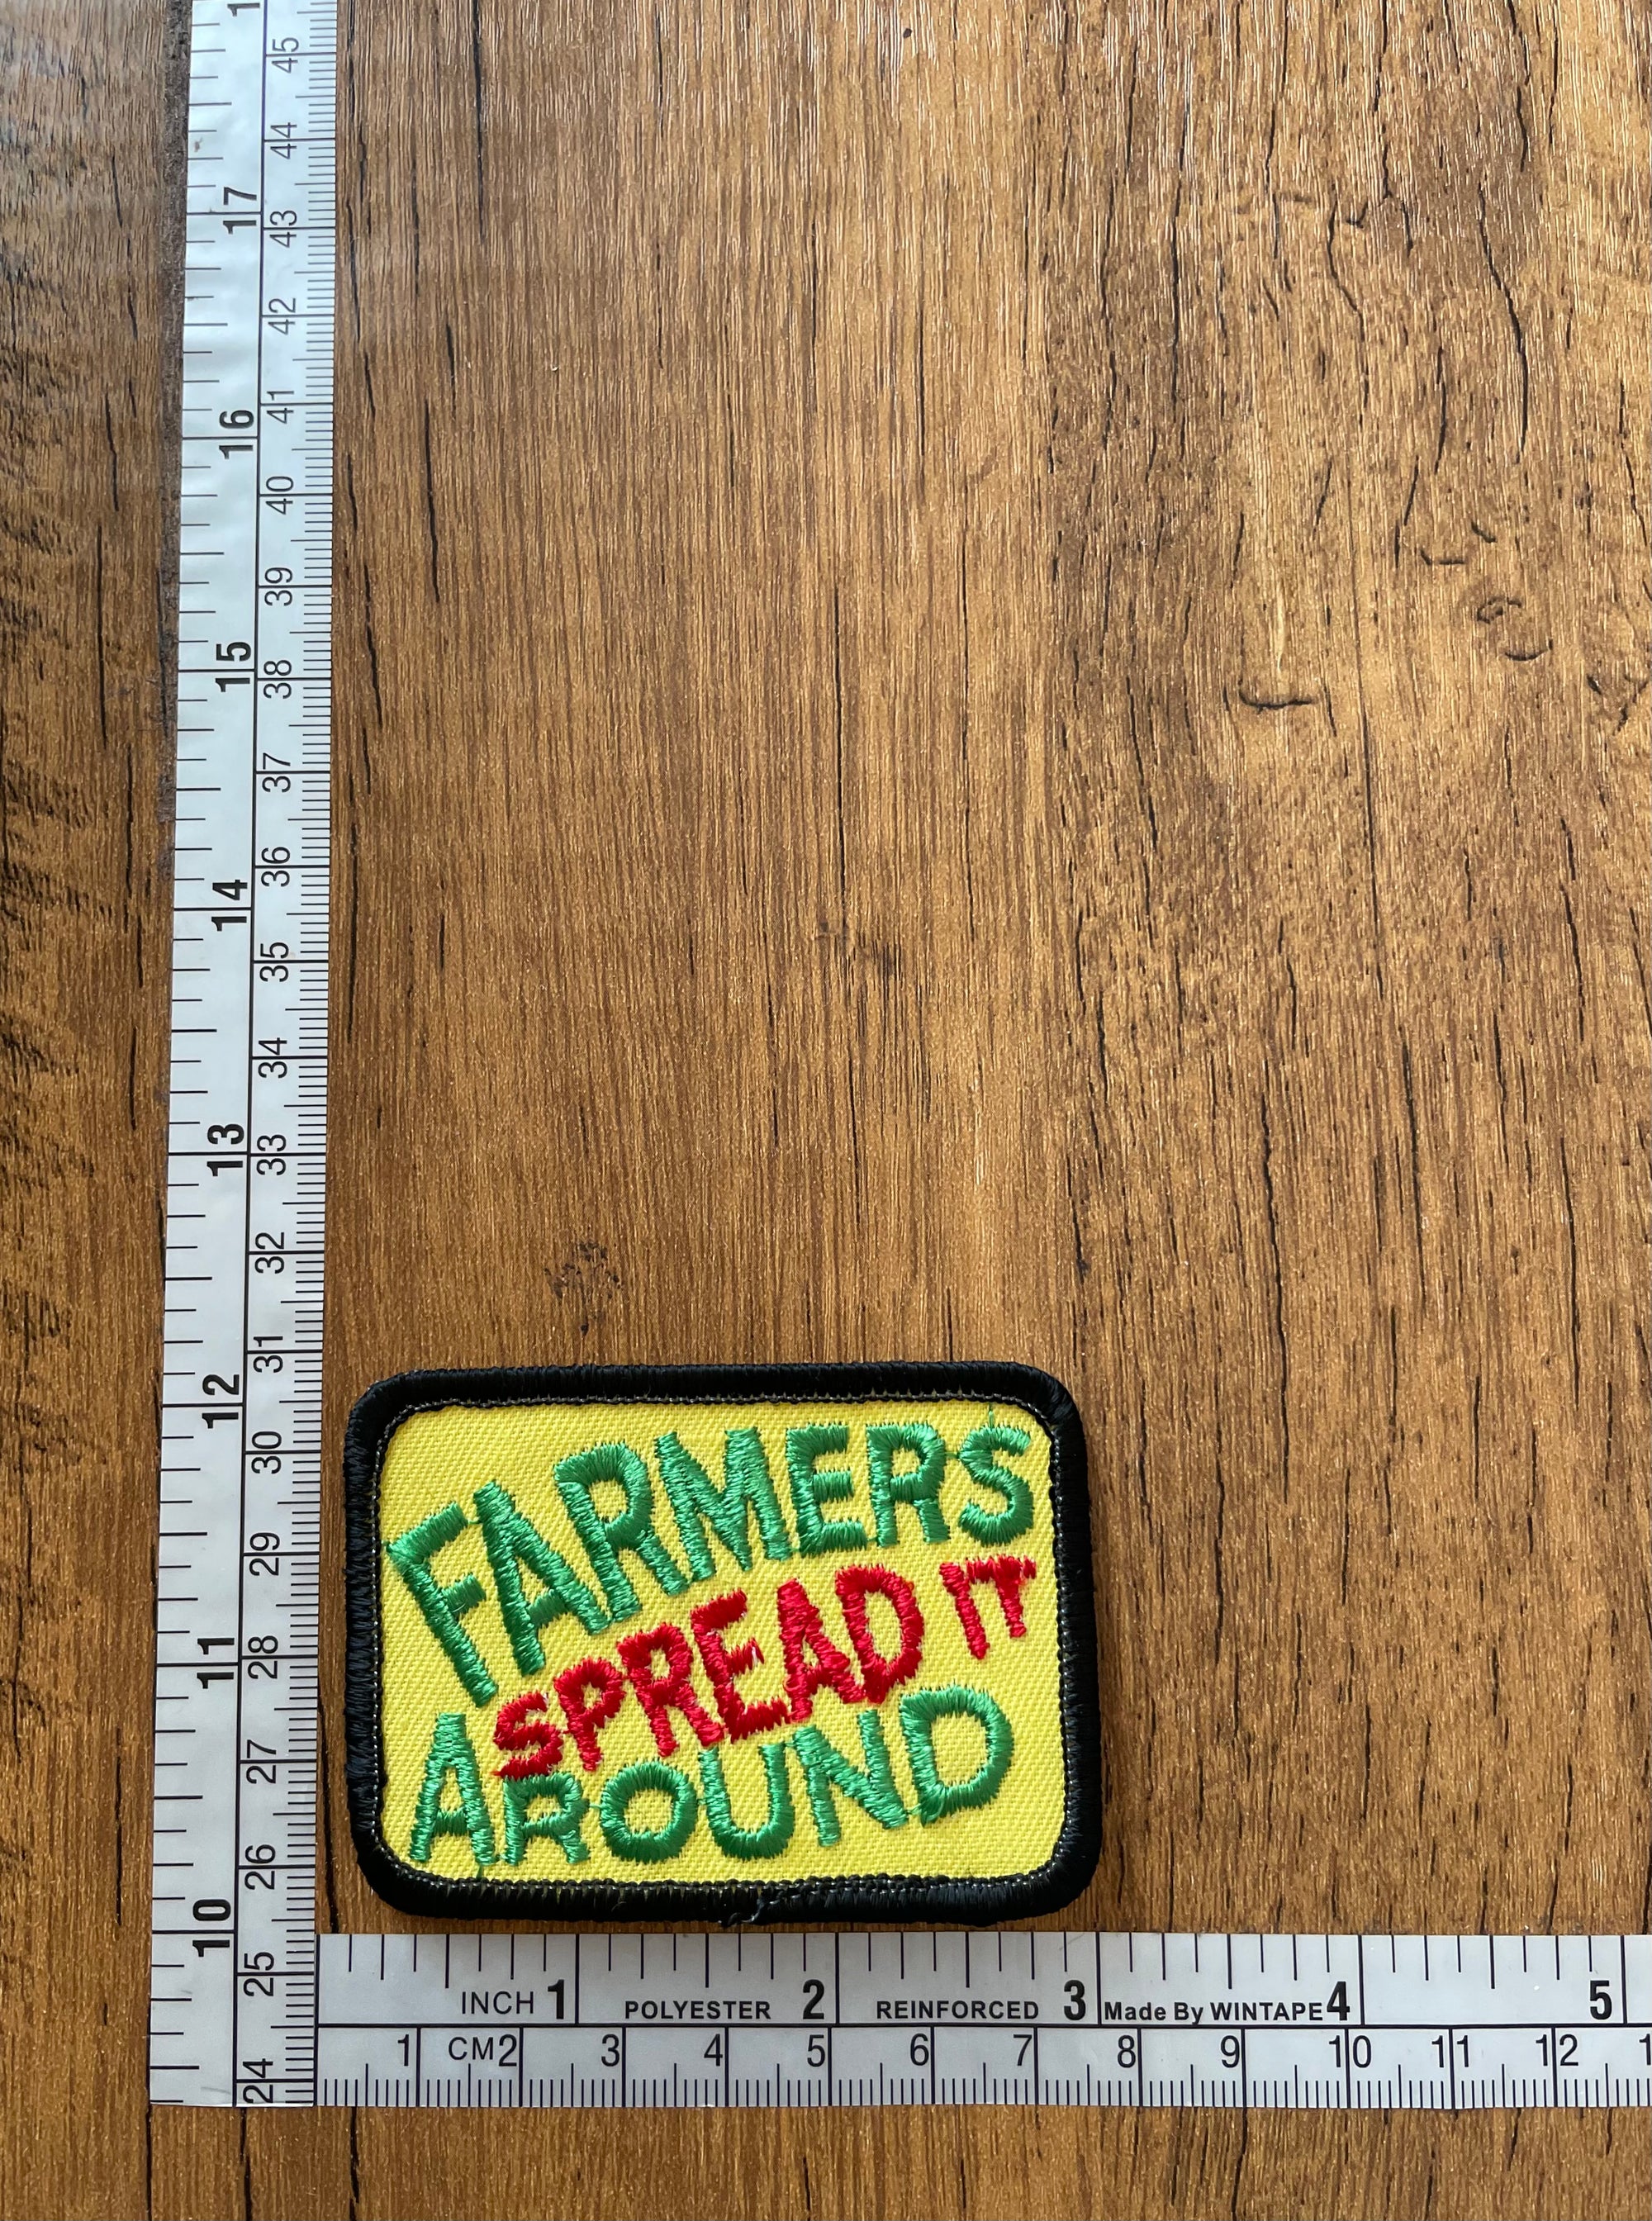 Vintage Farmers Spread It Around